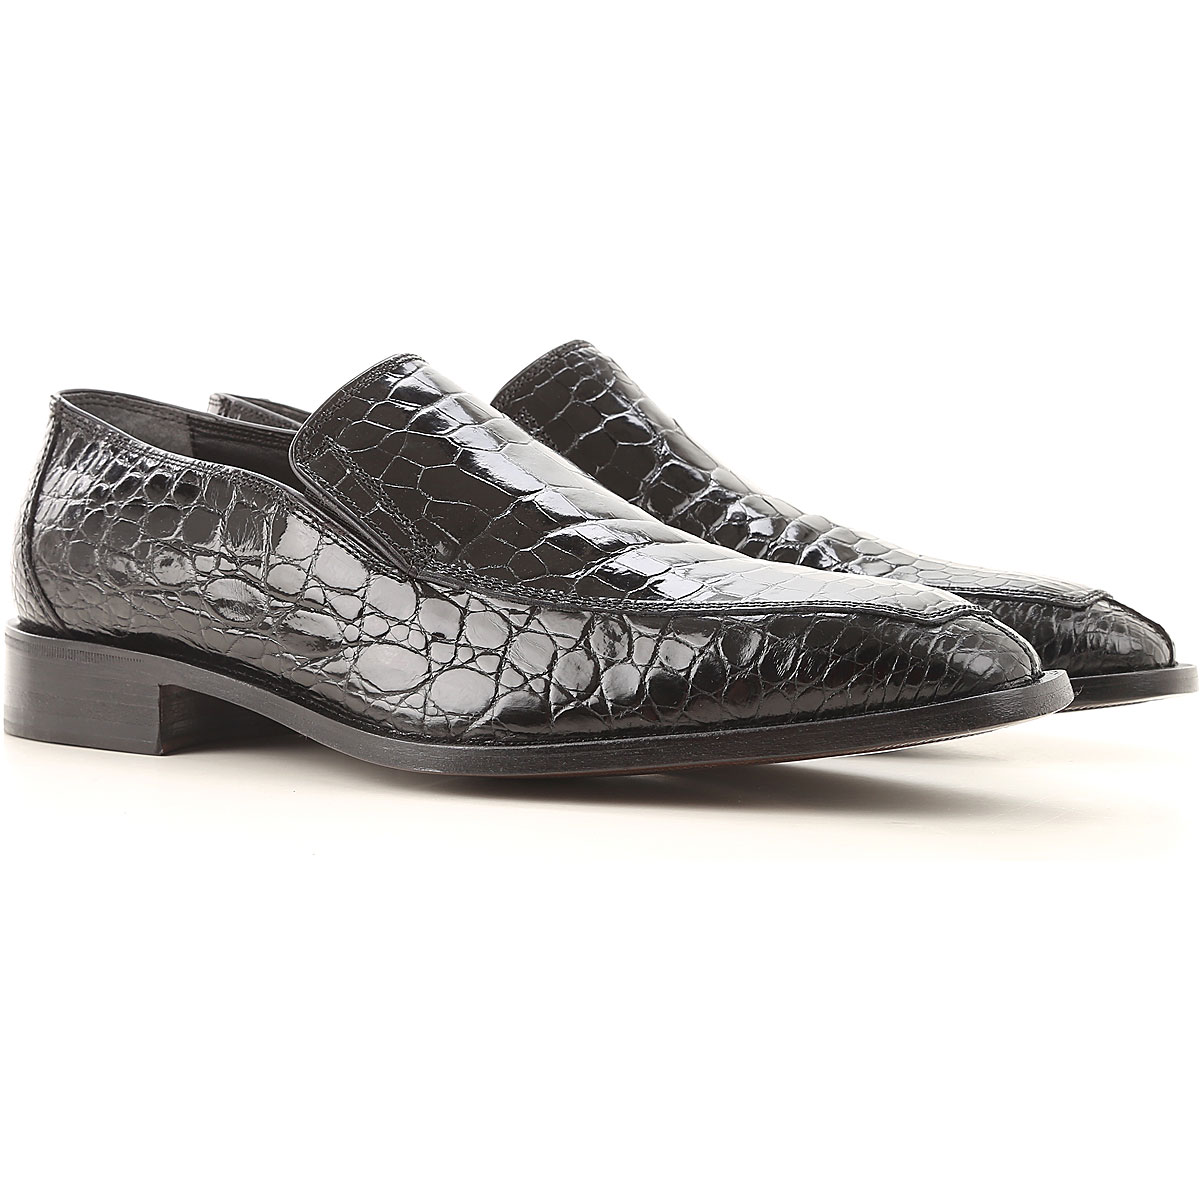 Mens Shoes Alberto Vico, Style code: 6639-nero-